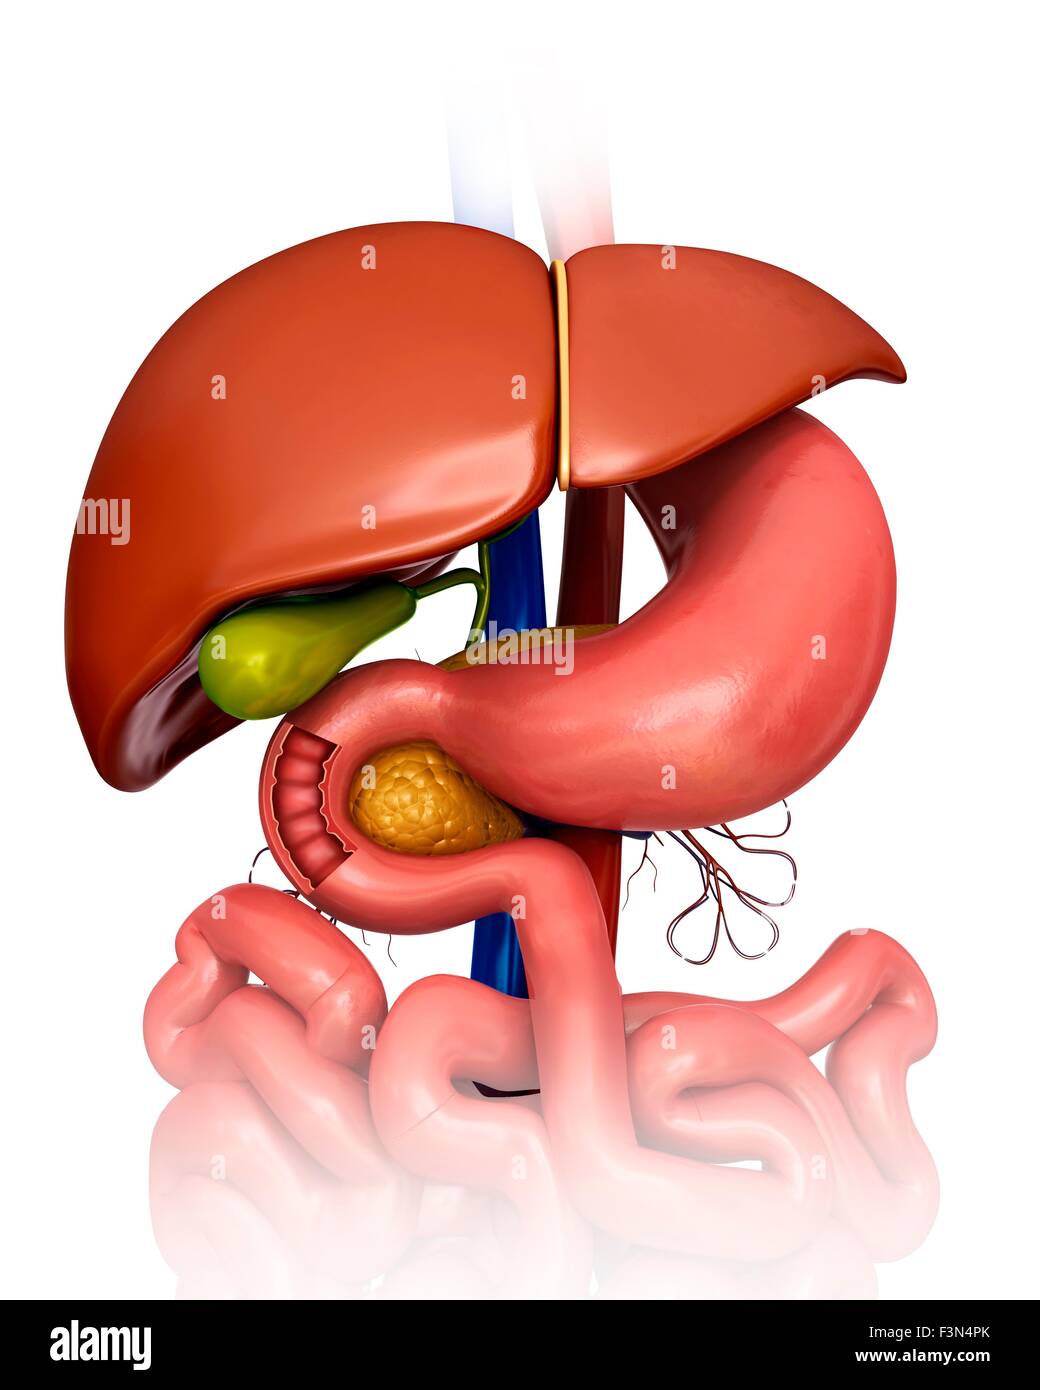 Human internal organs, illustration Stock Photo - Alamy